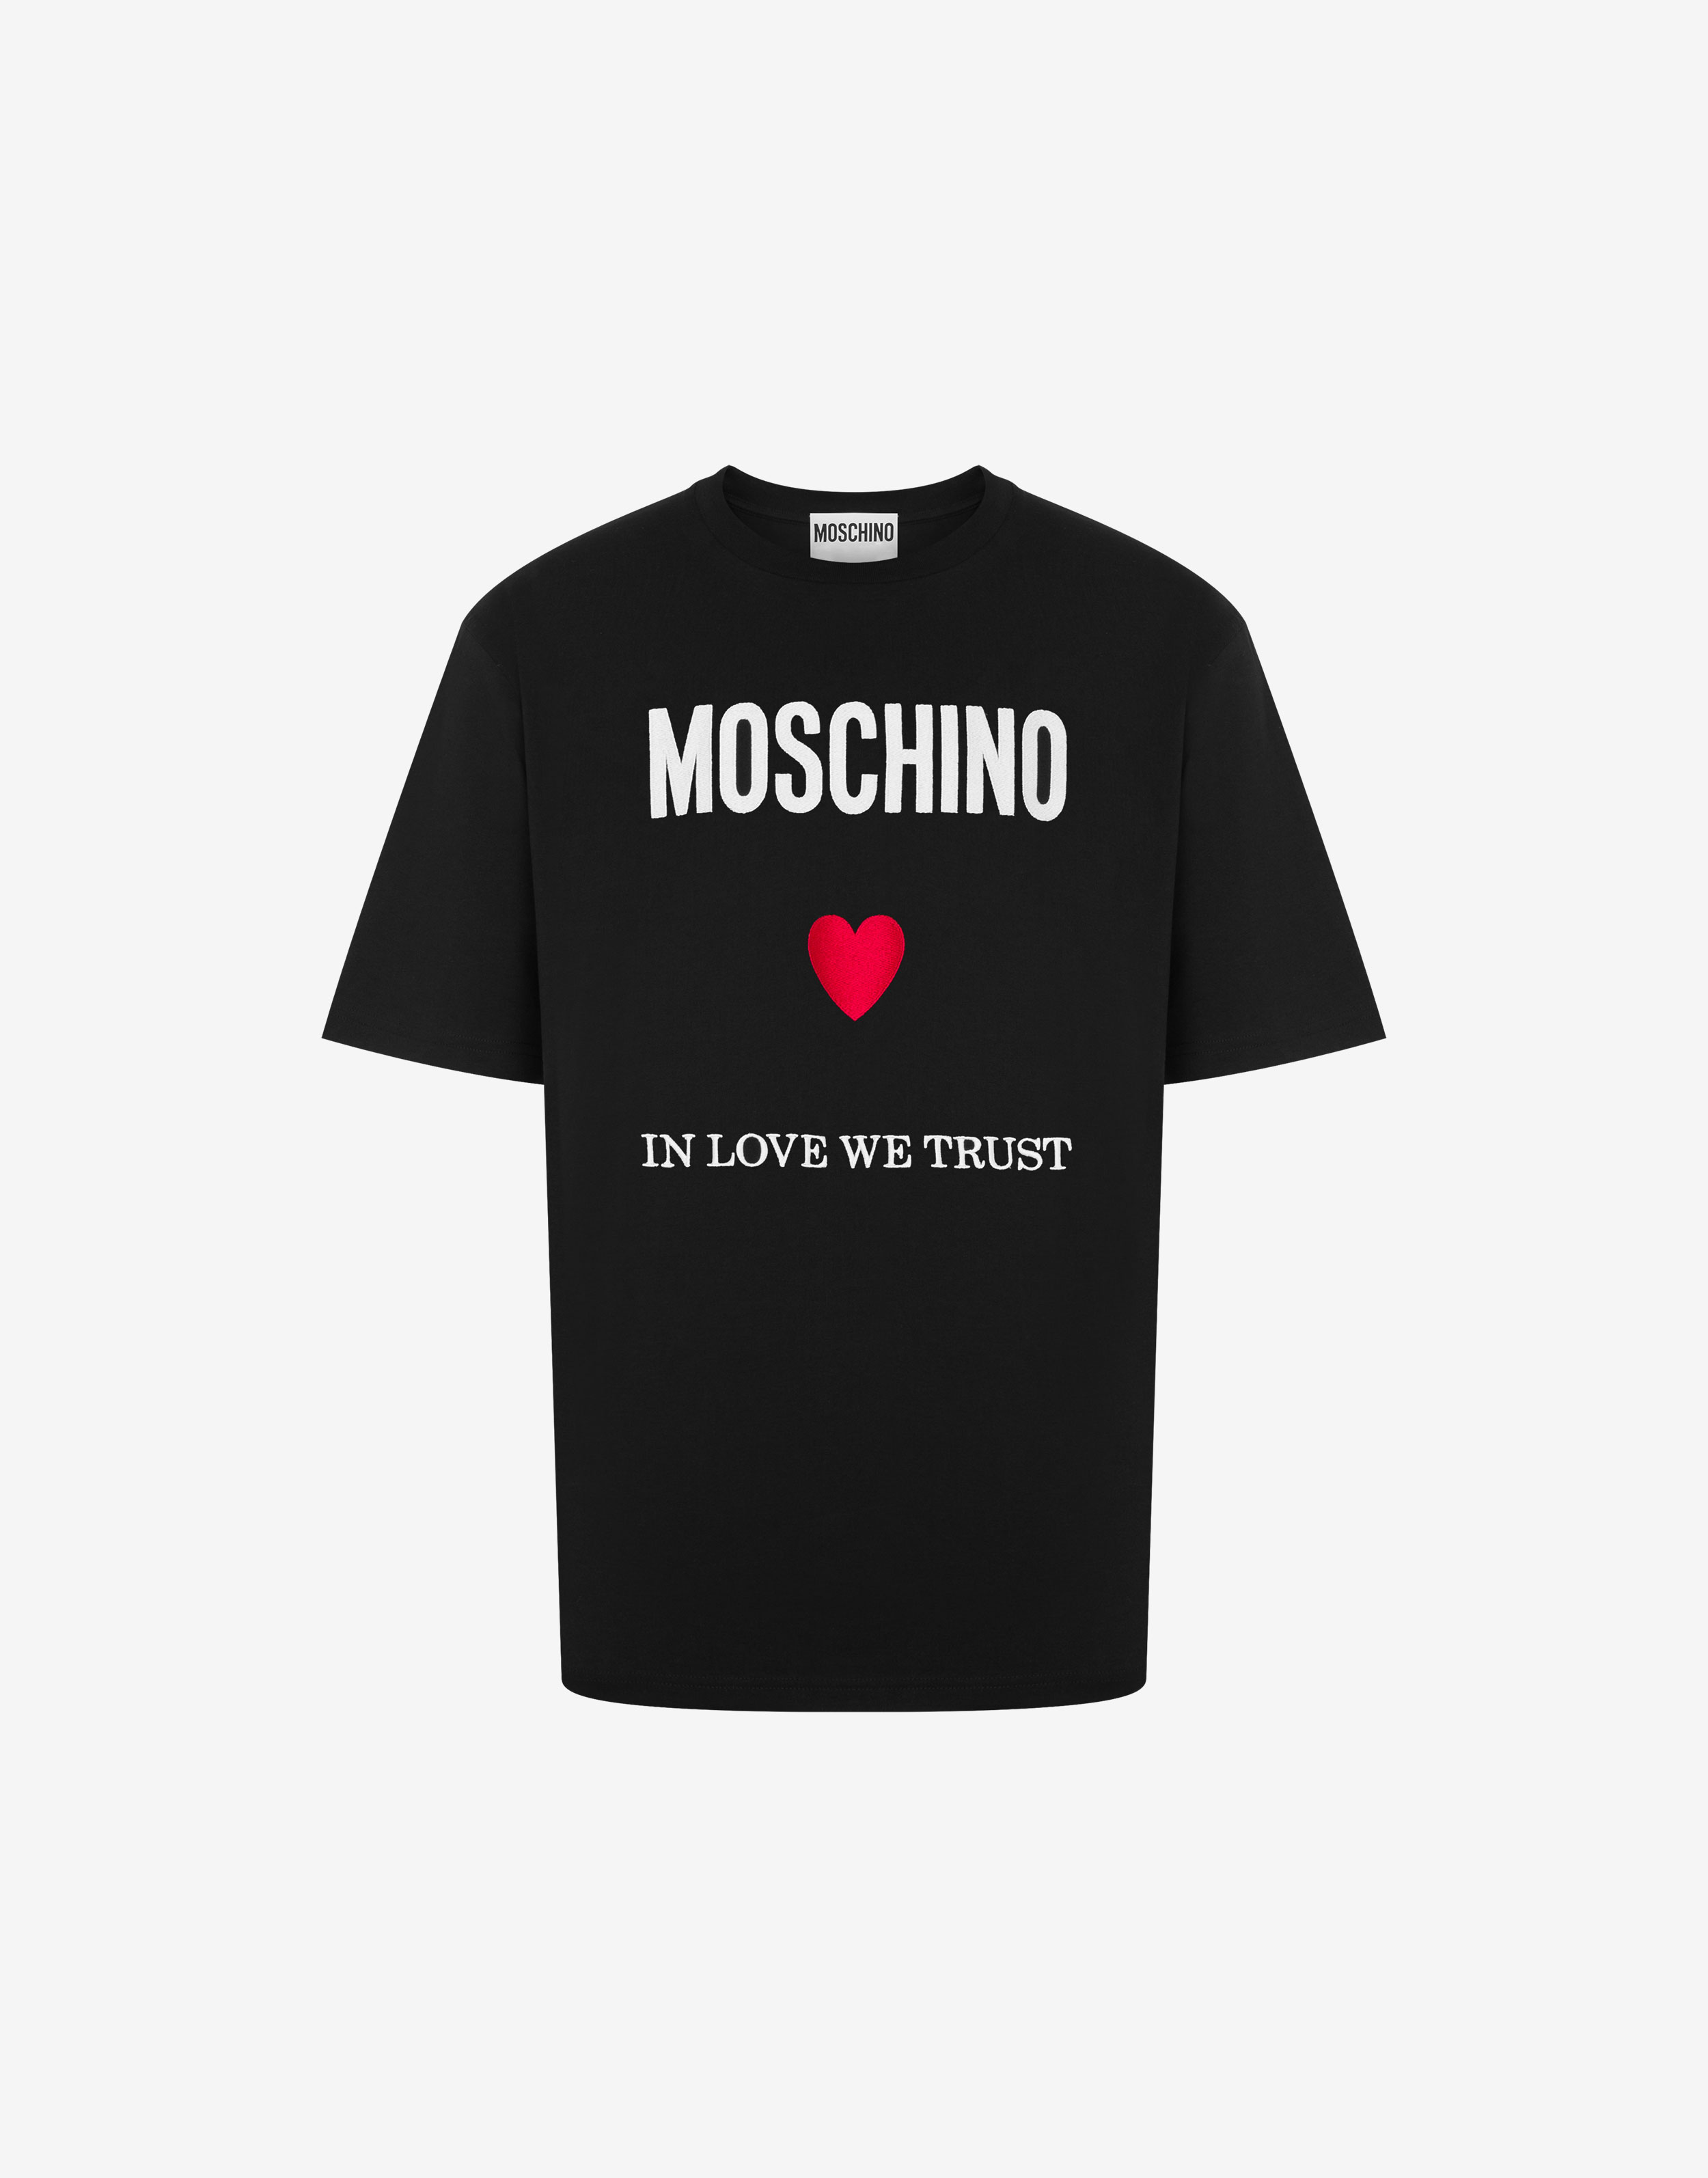 Moschino T Shirt Men Free Shipping Online | website.jkuat.ac.ke